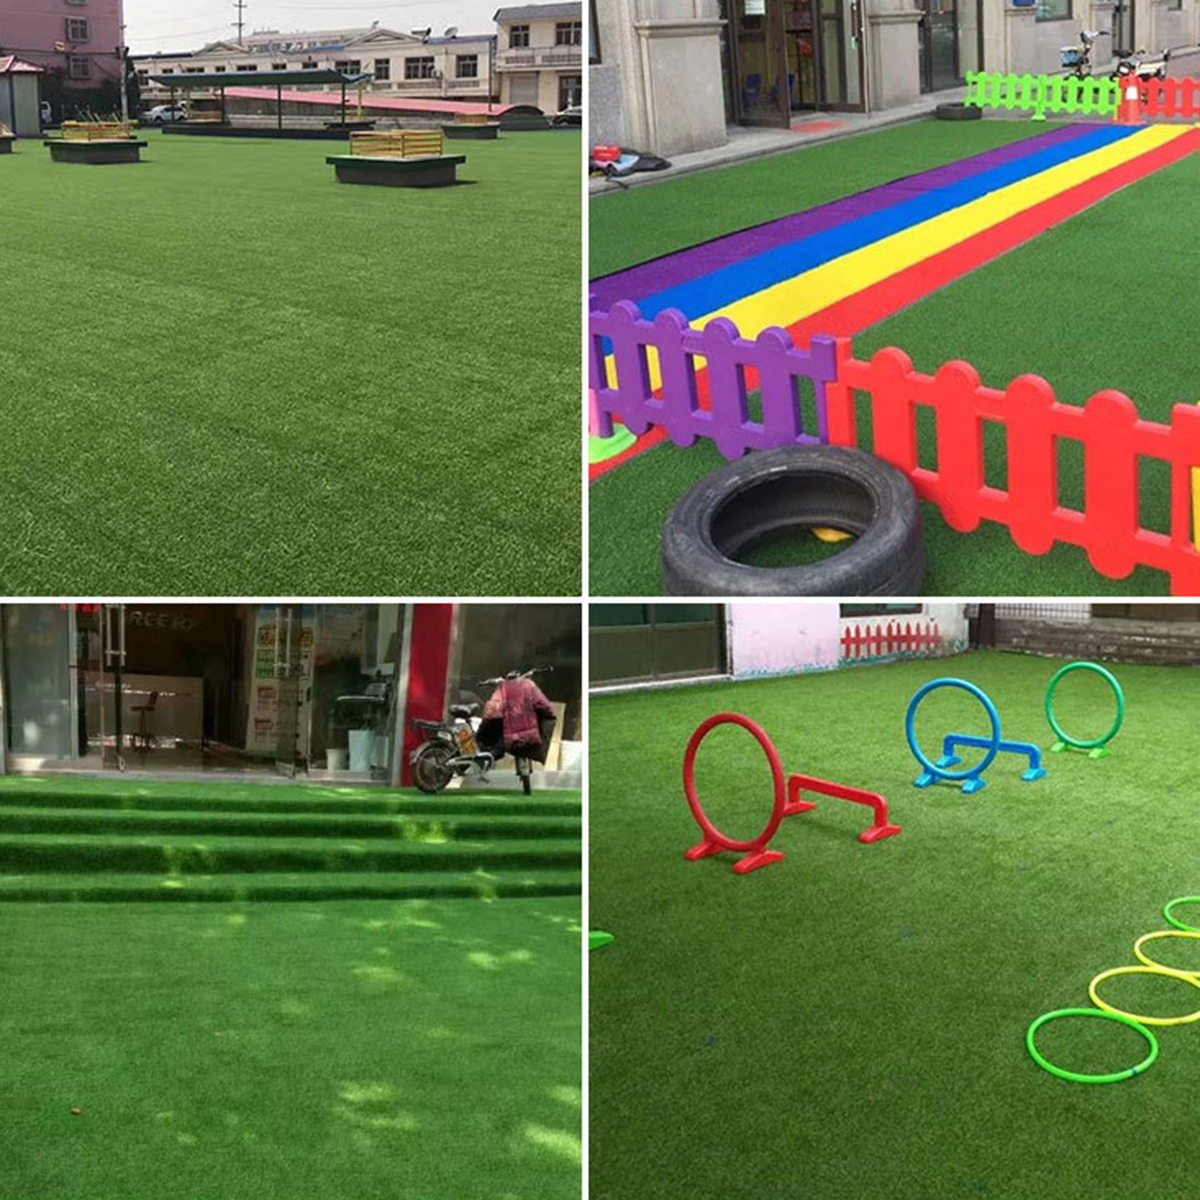 Artificial-Grass-Lawn-Turf-Synthetic-Plants-Lawn-Garden-Flooring-Decor-1702500-8